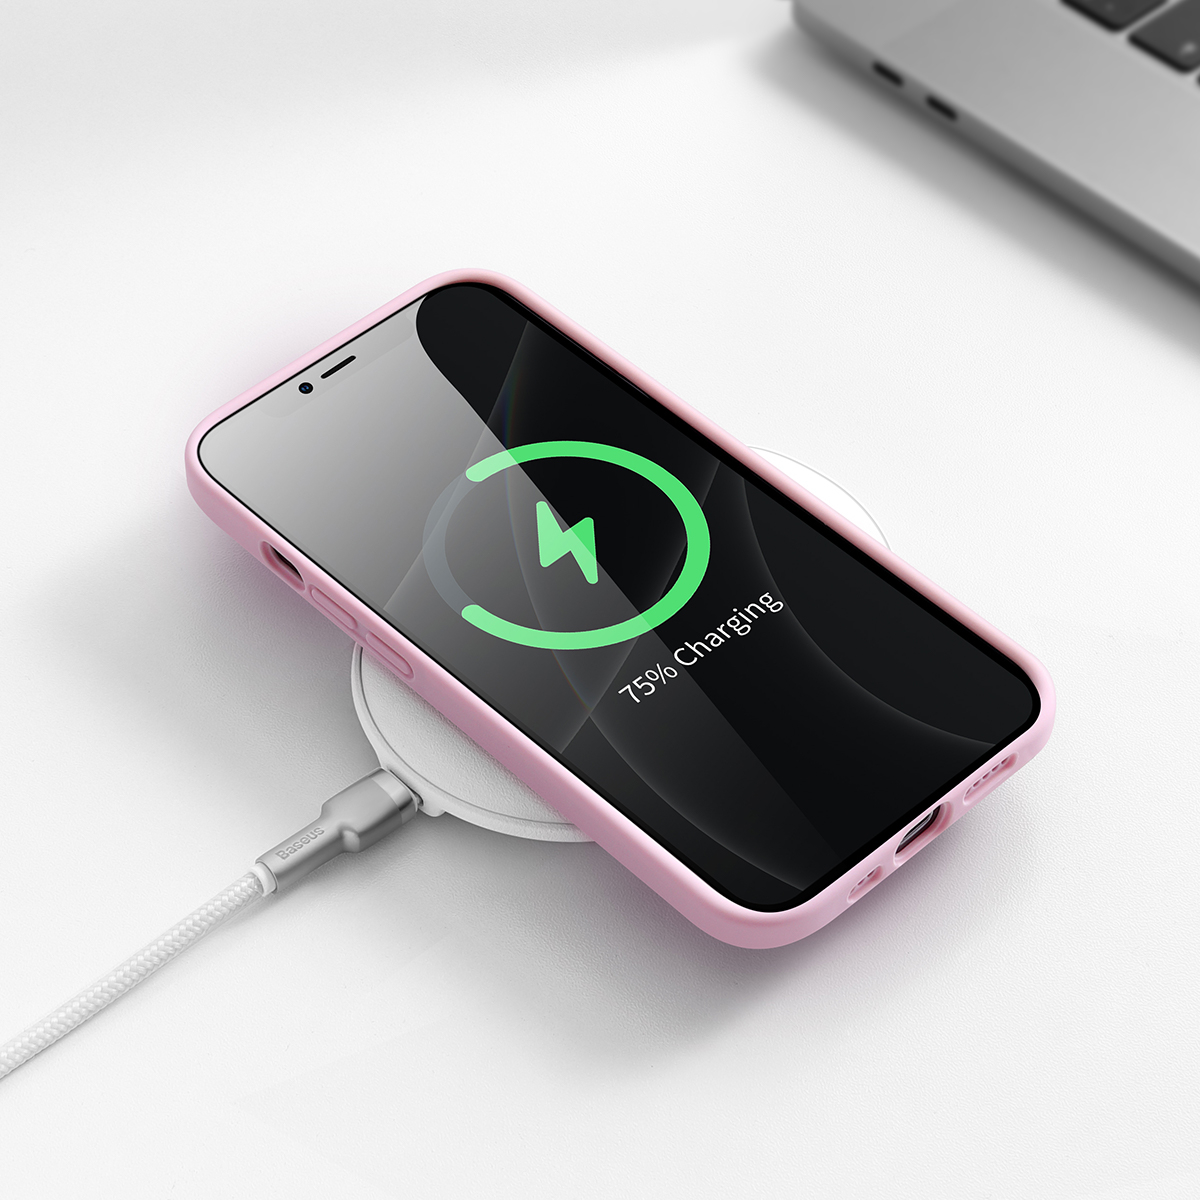 Baseus Liquid silikonskal till iPhone 13 Pro, rosa